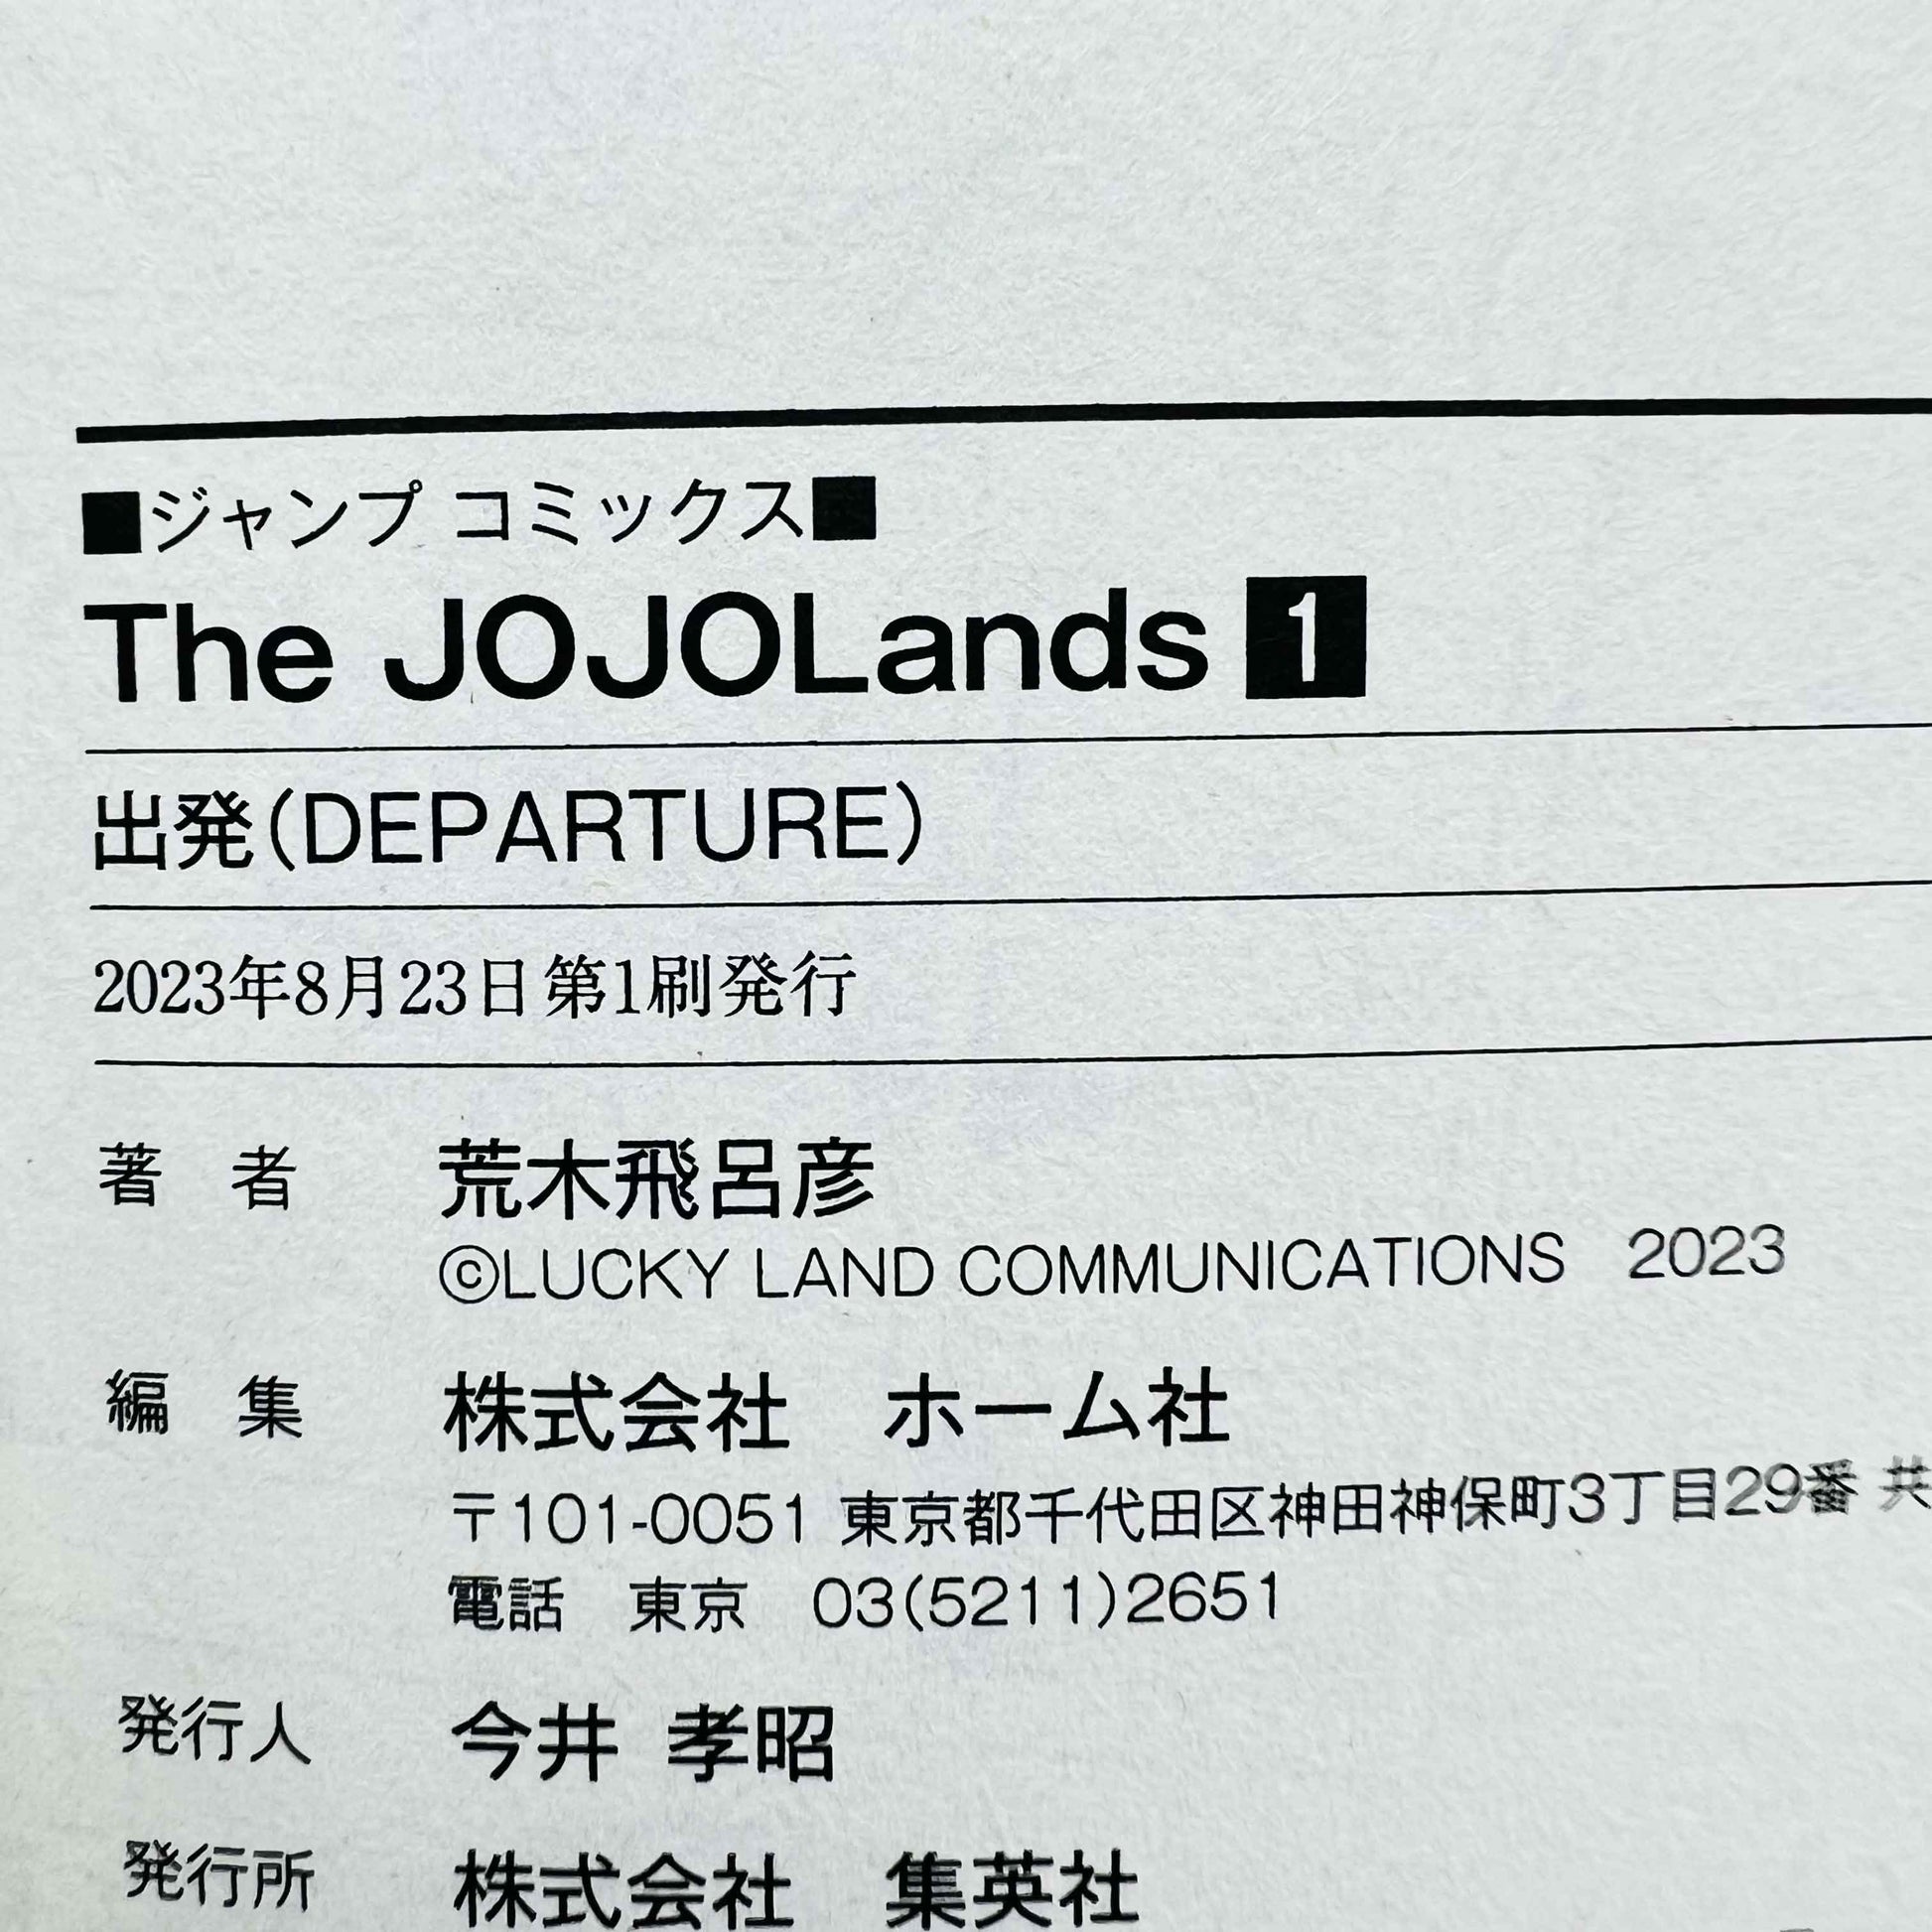 The JoJoLands - Jojo's Bizarre Adventure Part 9 - Volume 01 /w Obi - 1stPrint.net - 1st First Print Edition Manga Store - M-JOJOLANDS-01-001